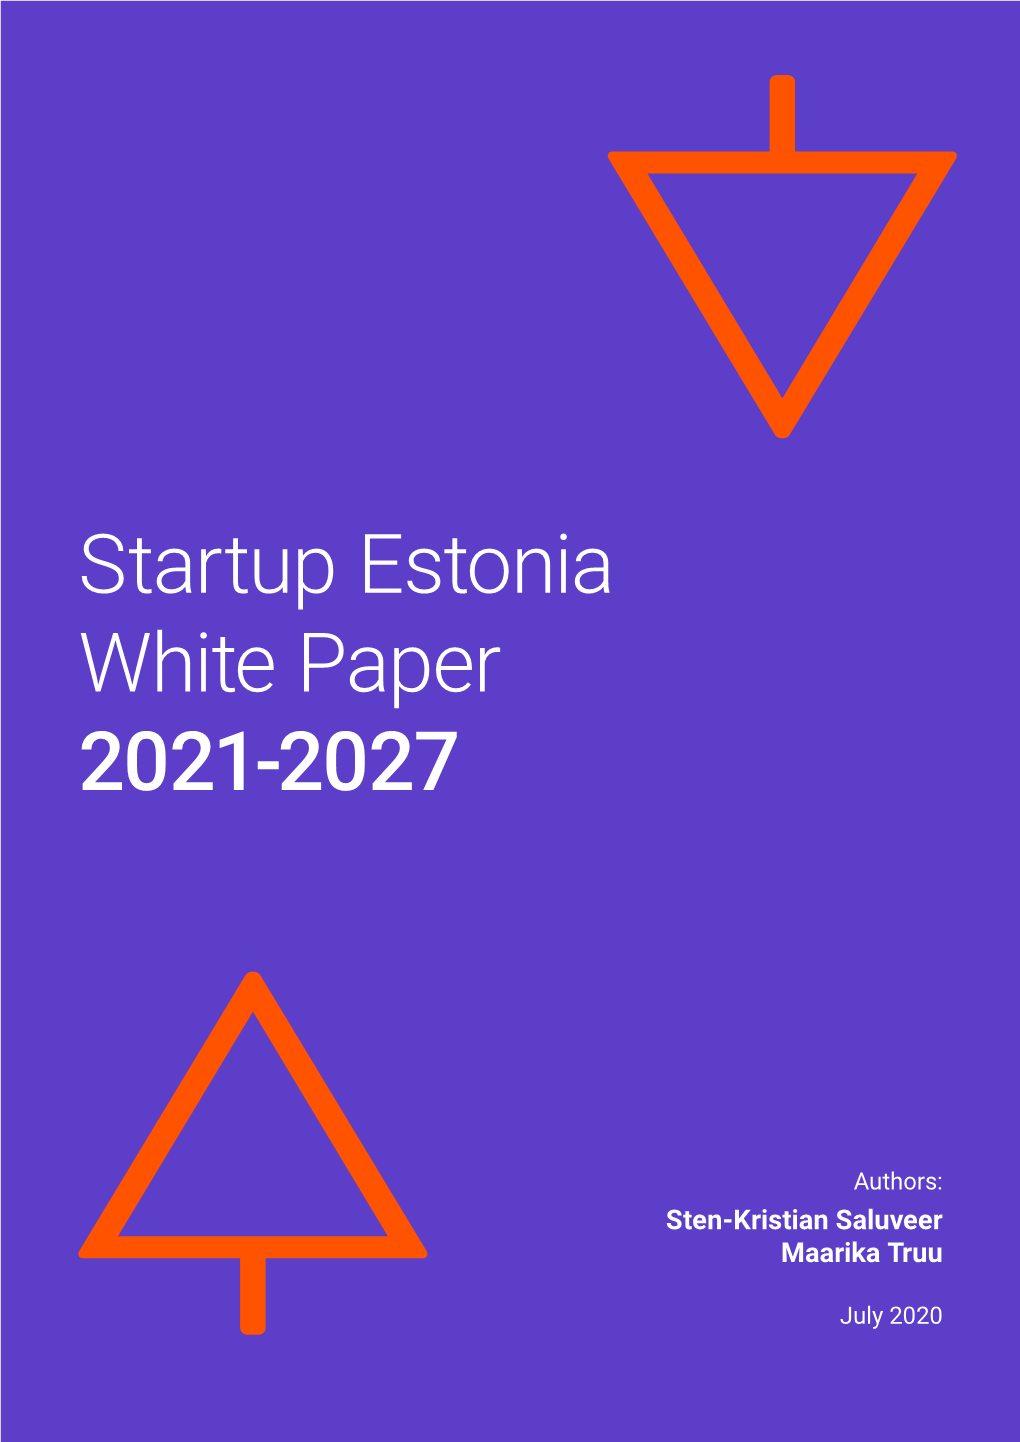 Startup Estonia White Paper 2021-2027